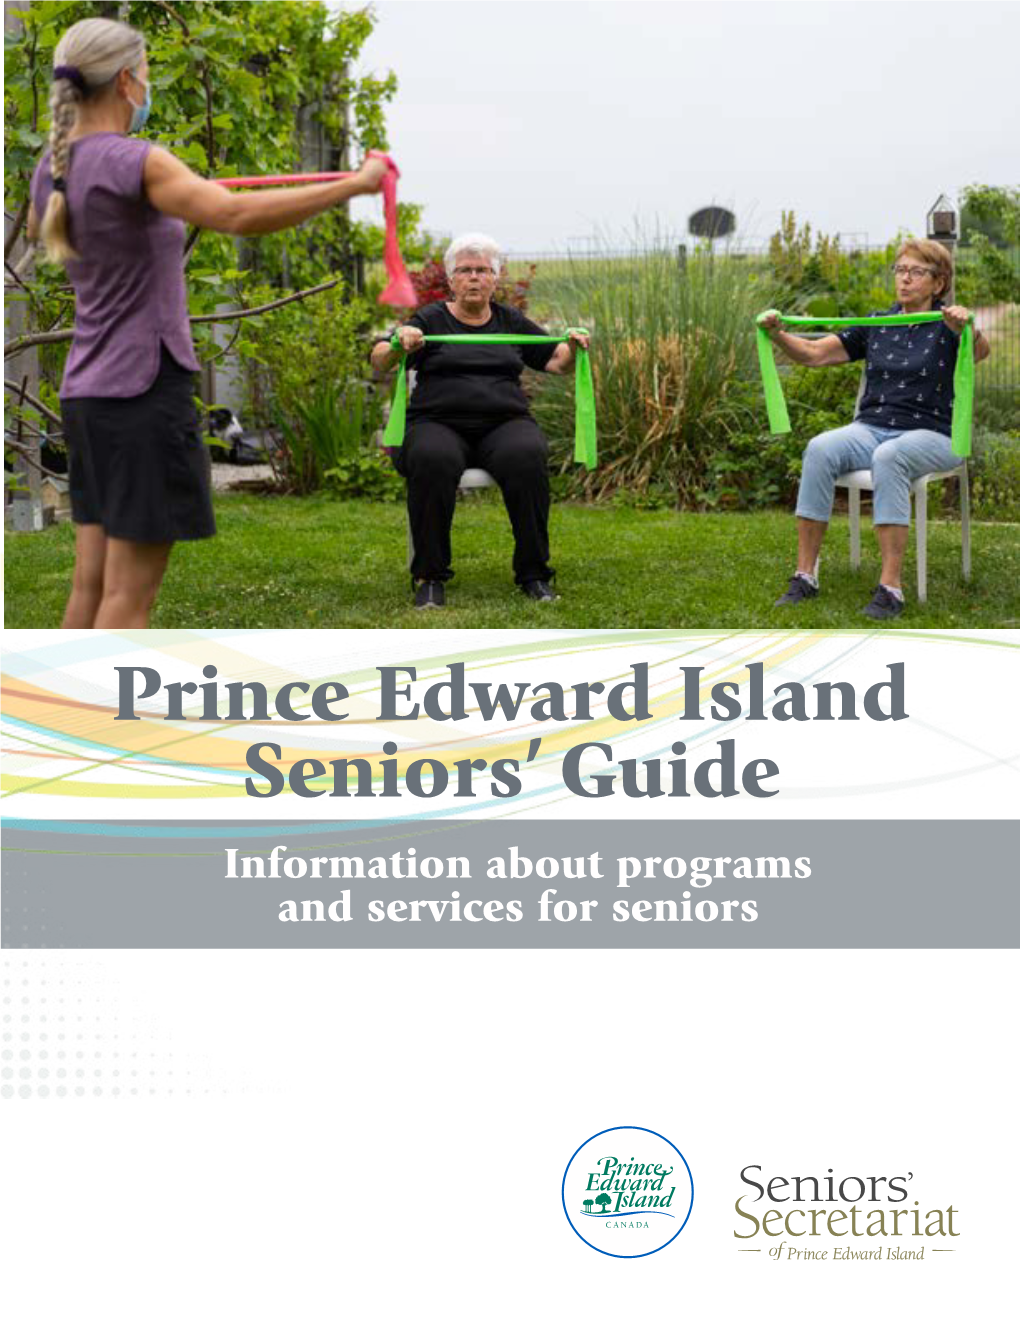 Prince Edward Island Seniors' Guide